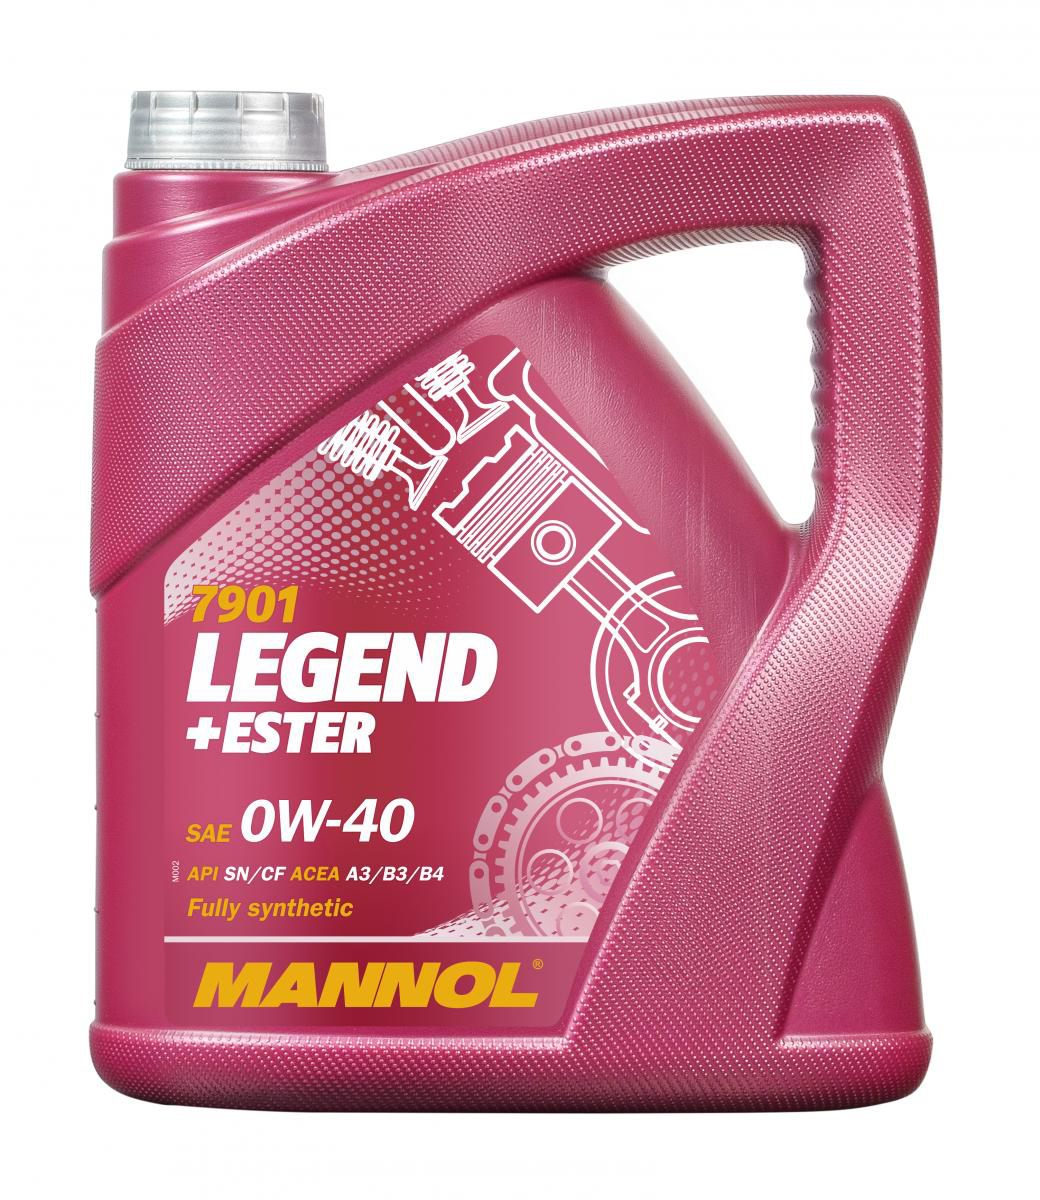 Legend+Ester 0W-40